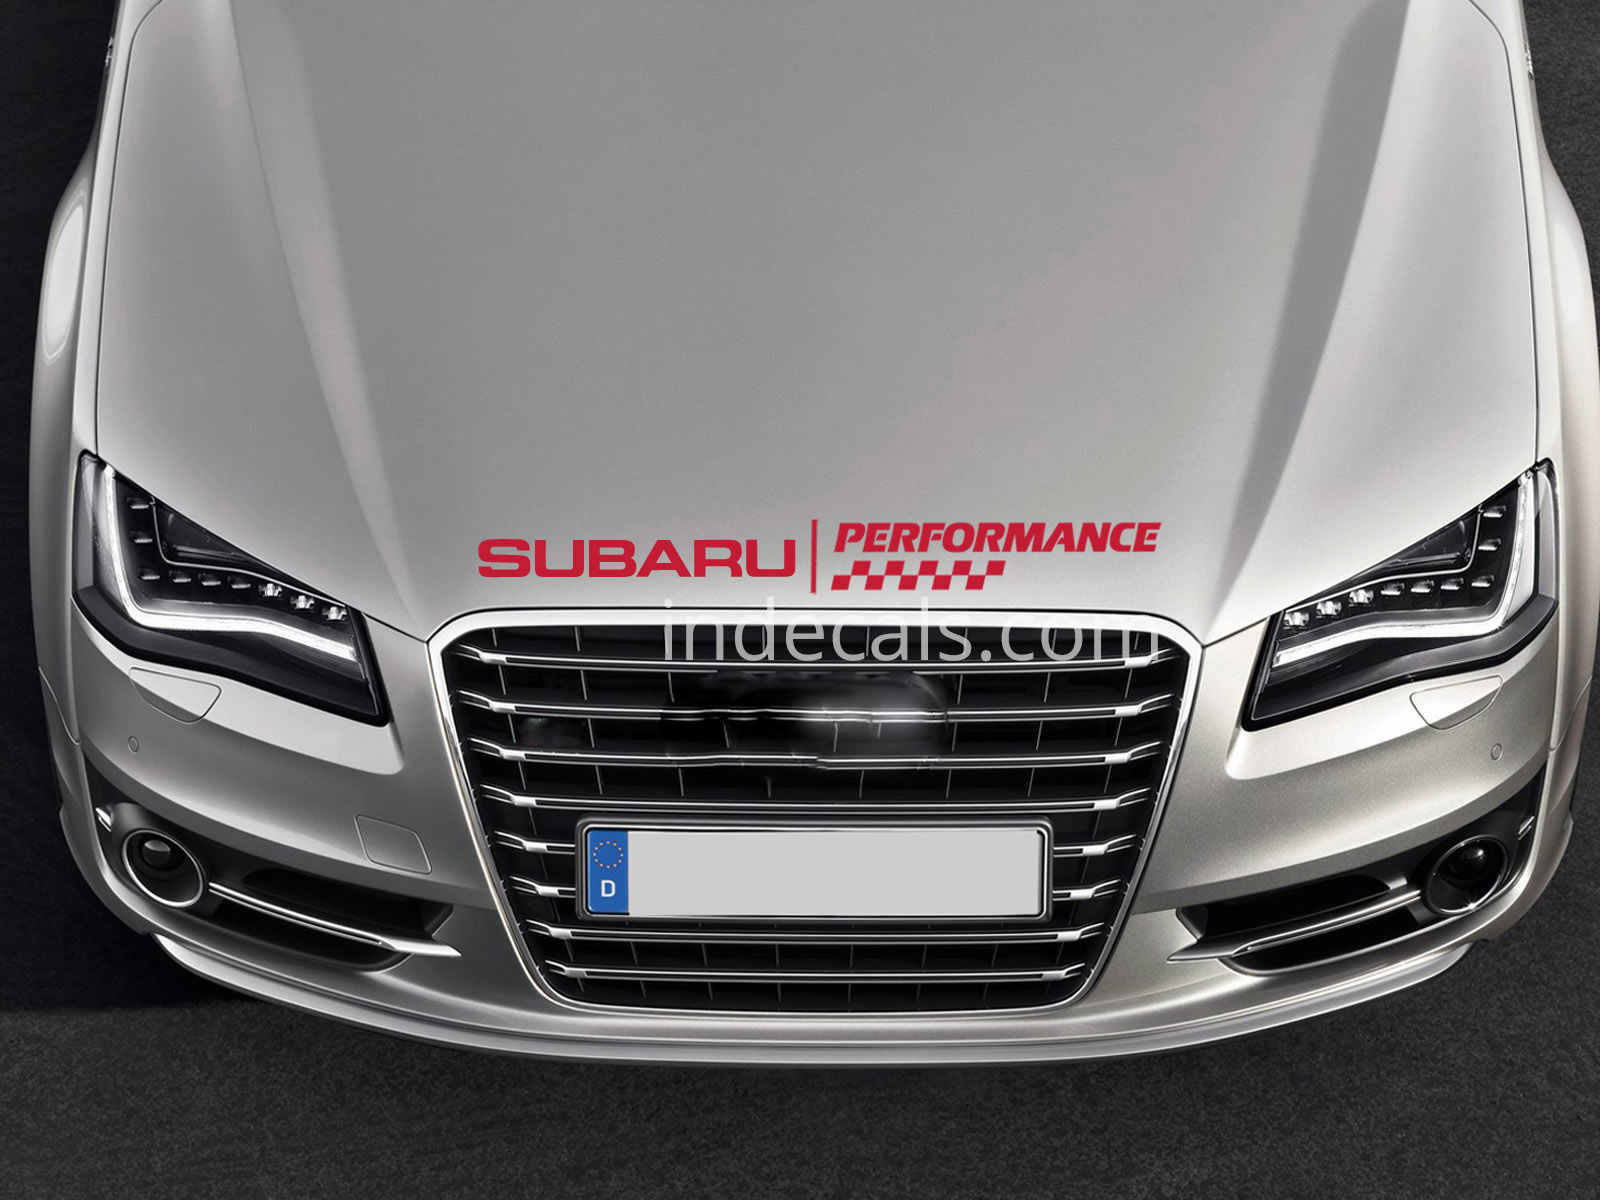 1 x Subaru Performance Sticker for Bonnet - Red